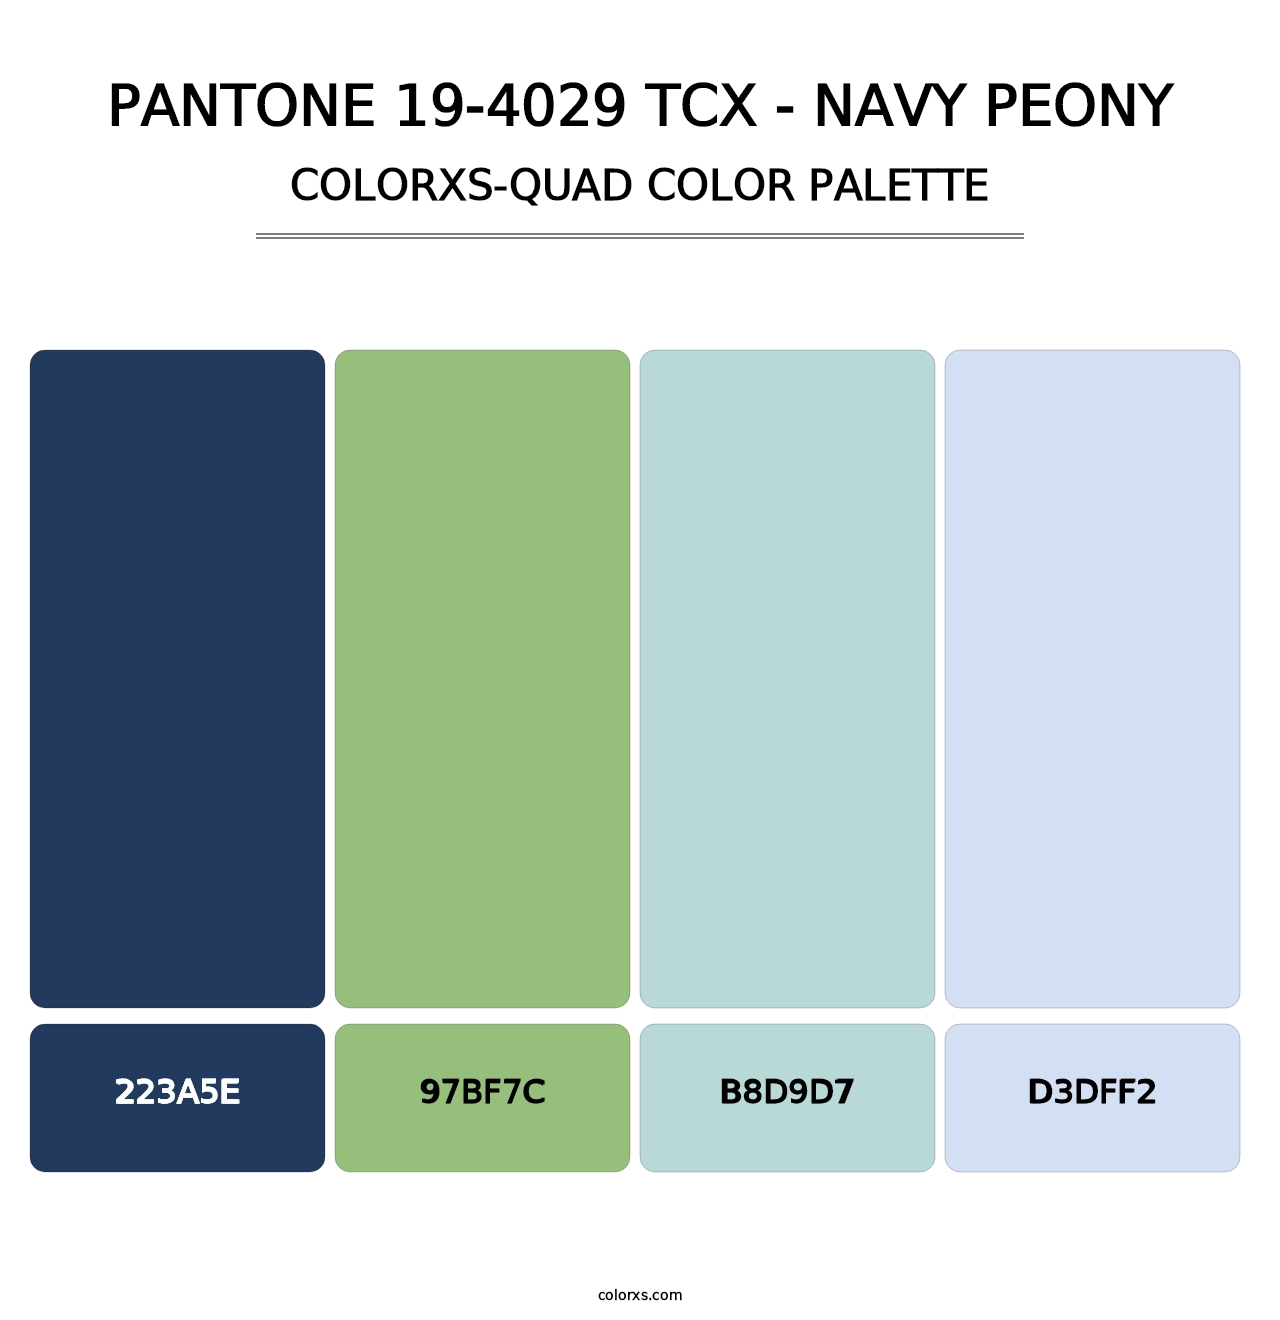 PANTONE 19-4029 TCX - Navy Peony - Colorxs Quad Palette